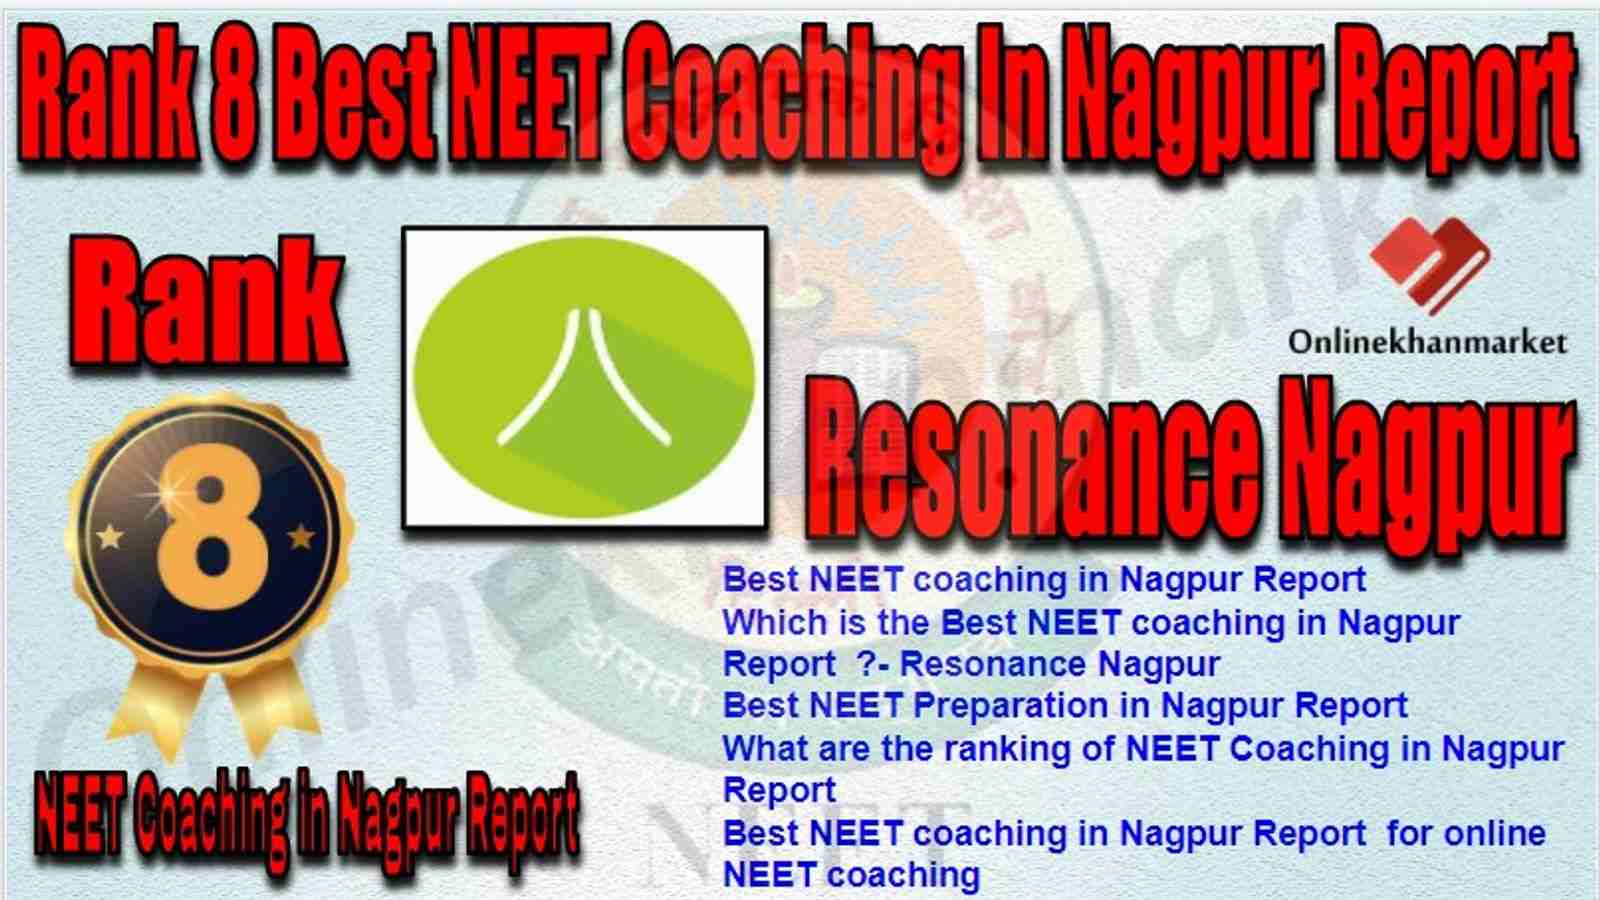 Rank 8 Best NEET Coaching nagpur report